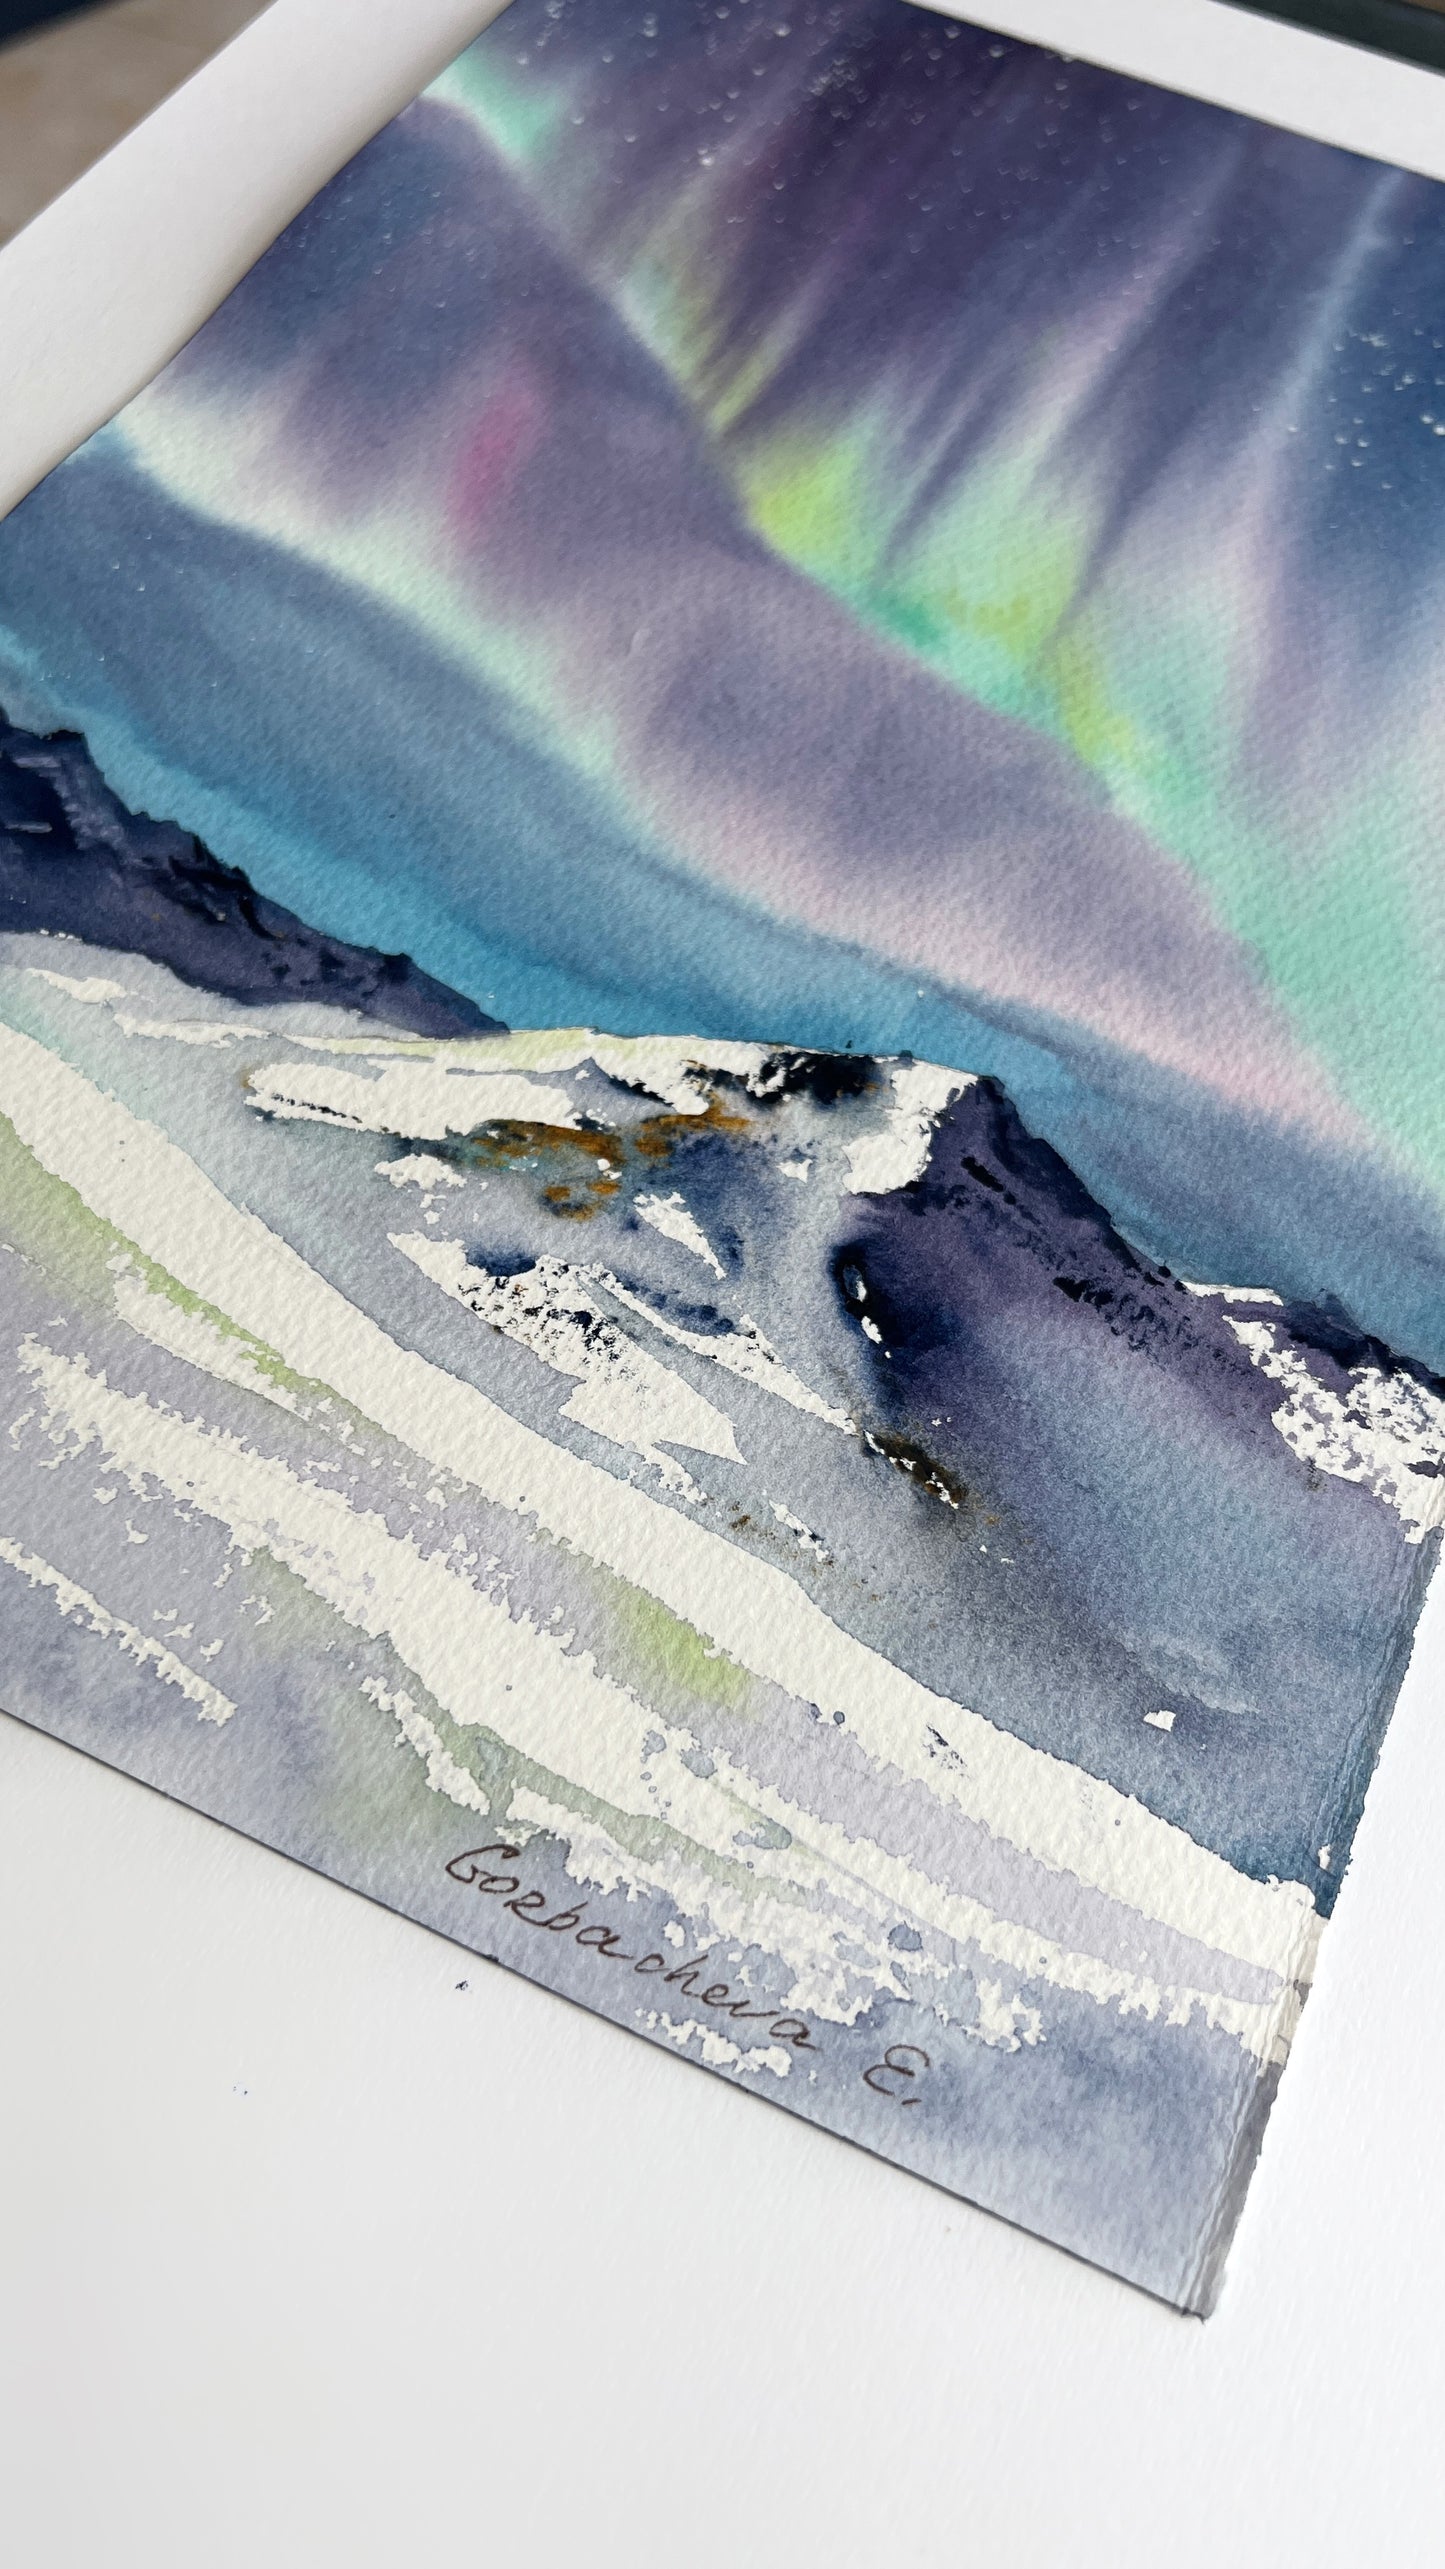 Aurora Borealis Painting Watercolor Original, Northern lights, Nordic Wall Art, Winter Mountain Landscape